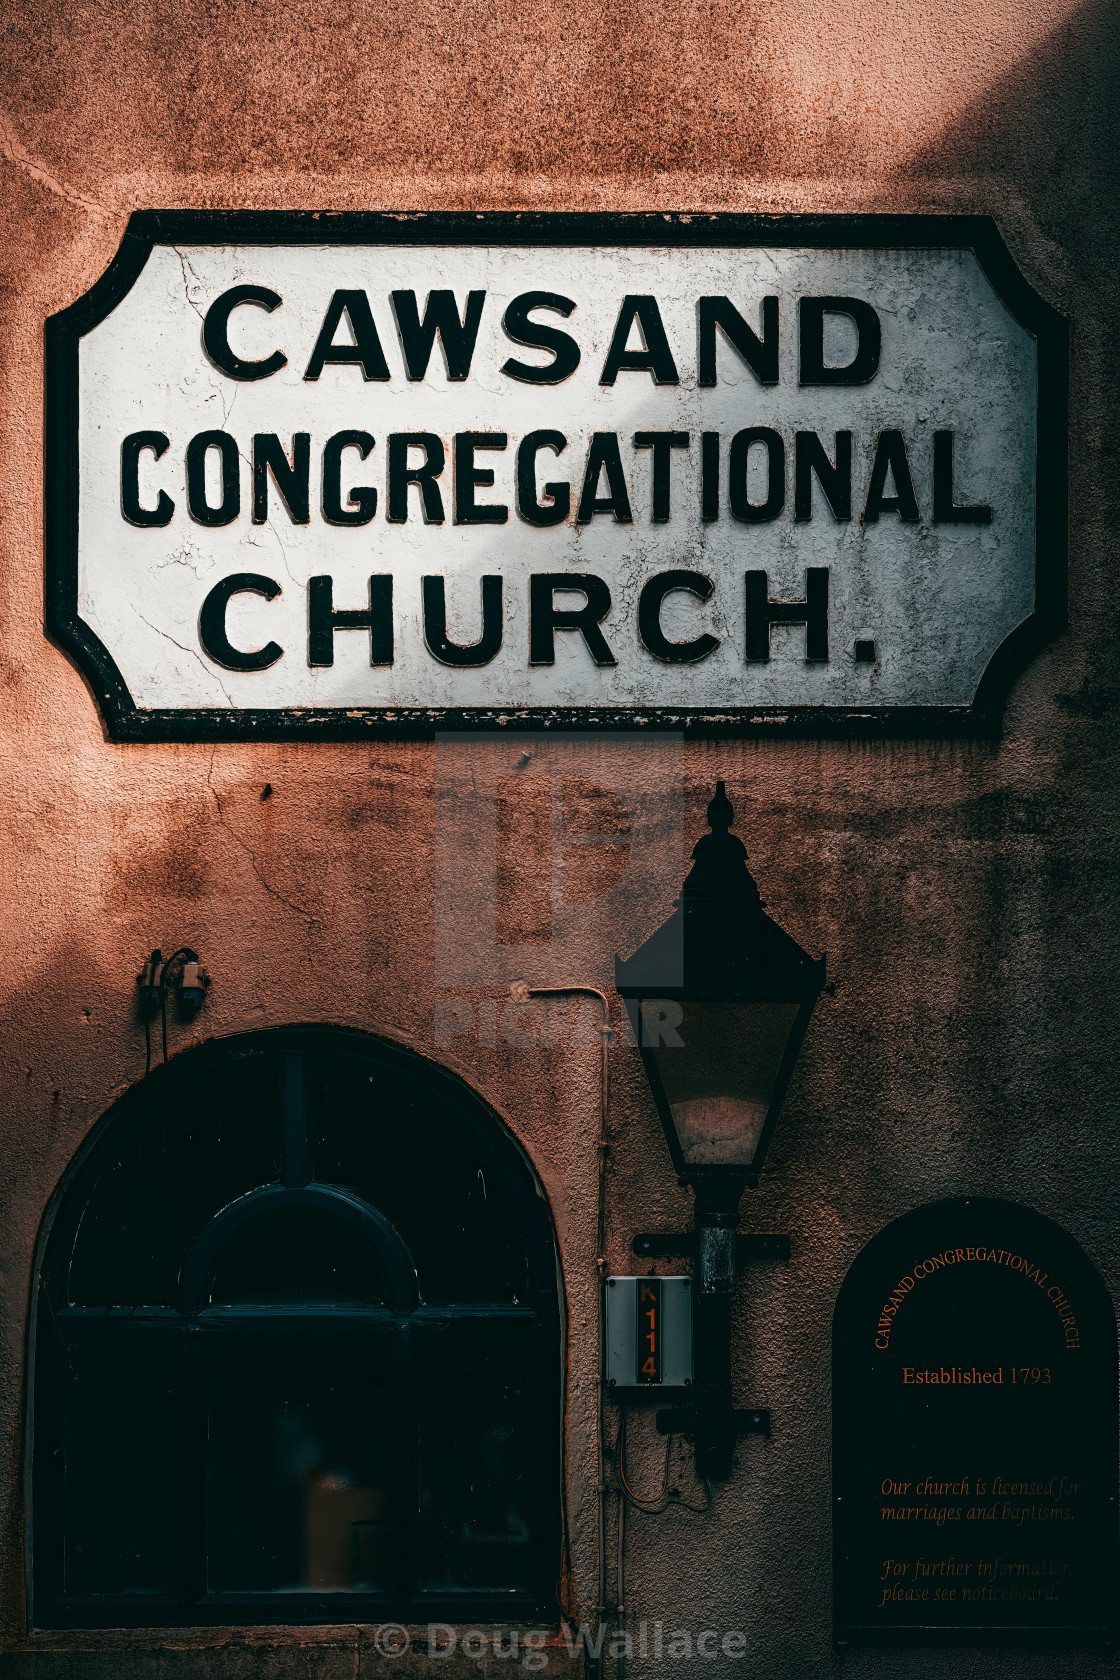 "Cawsand Congregational Church, Cawsand, Cornwall UK." stock image